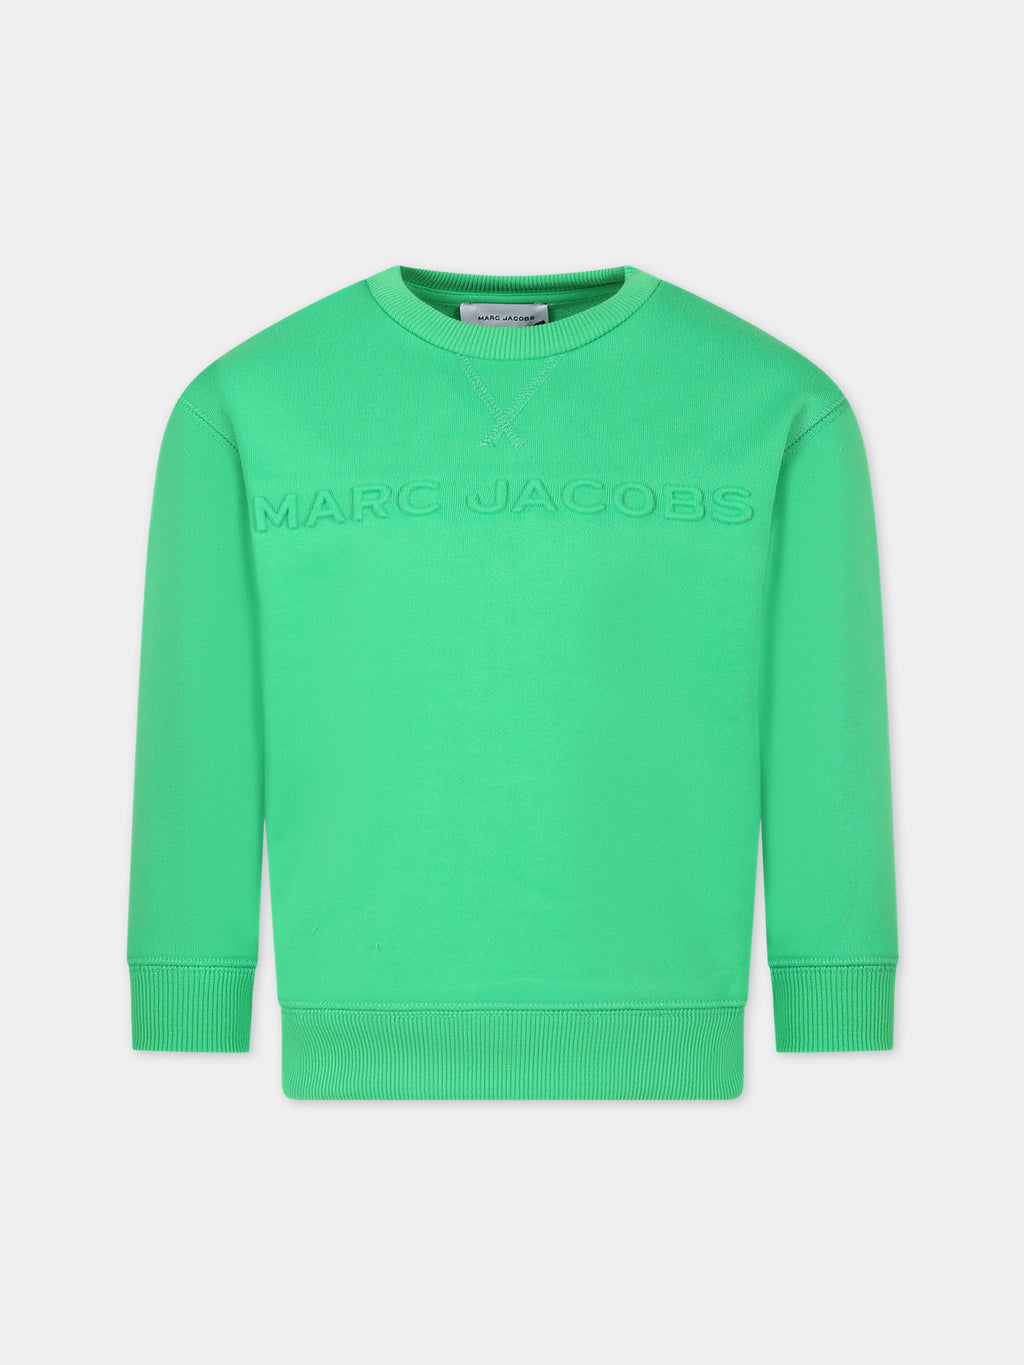 Green sweatshirt for kids with logo